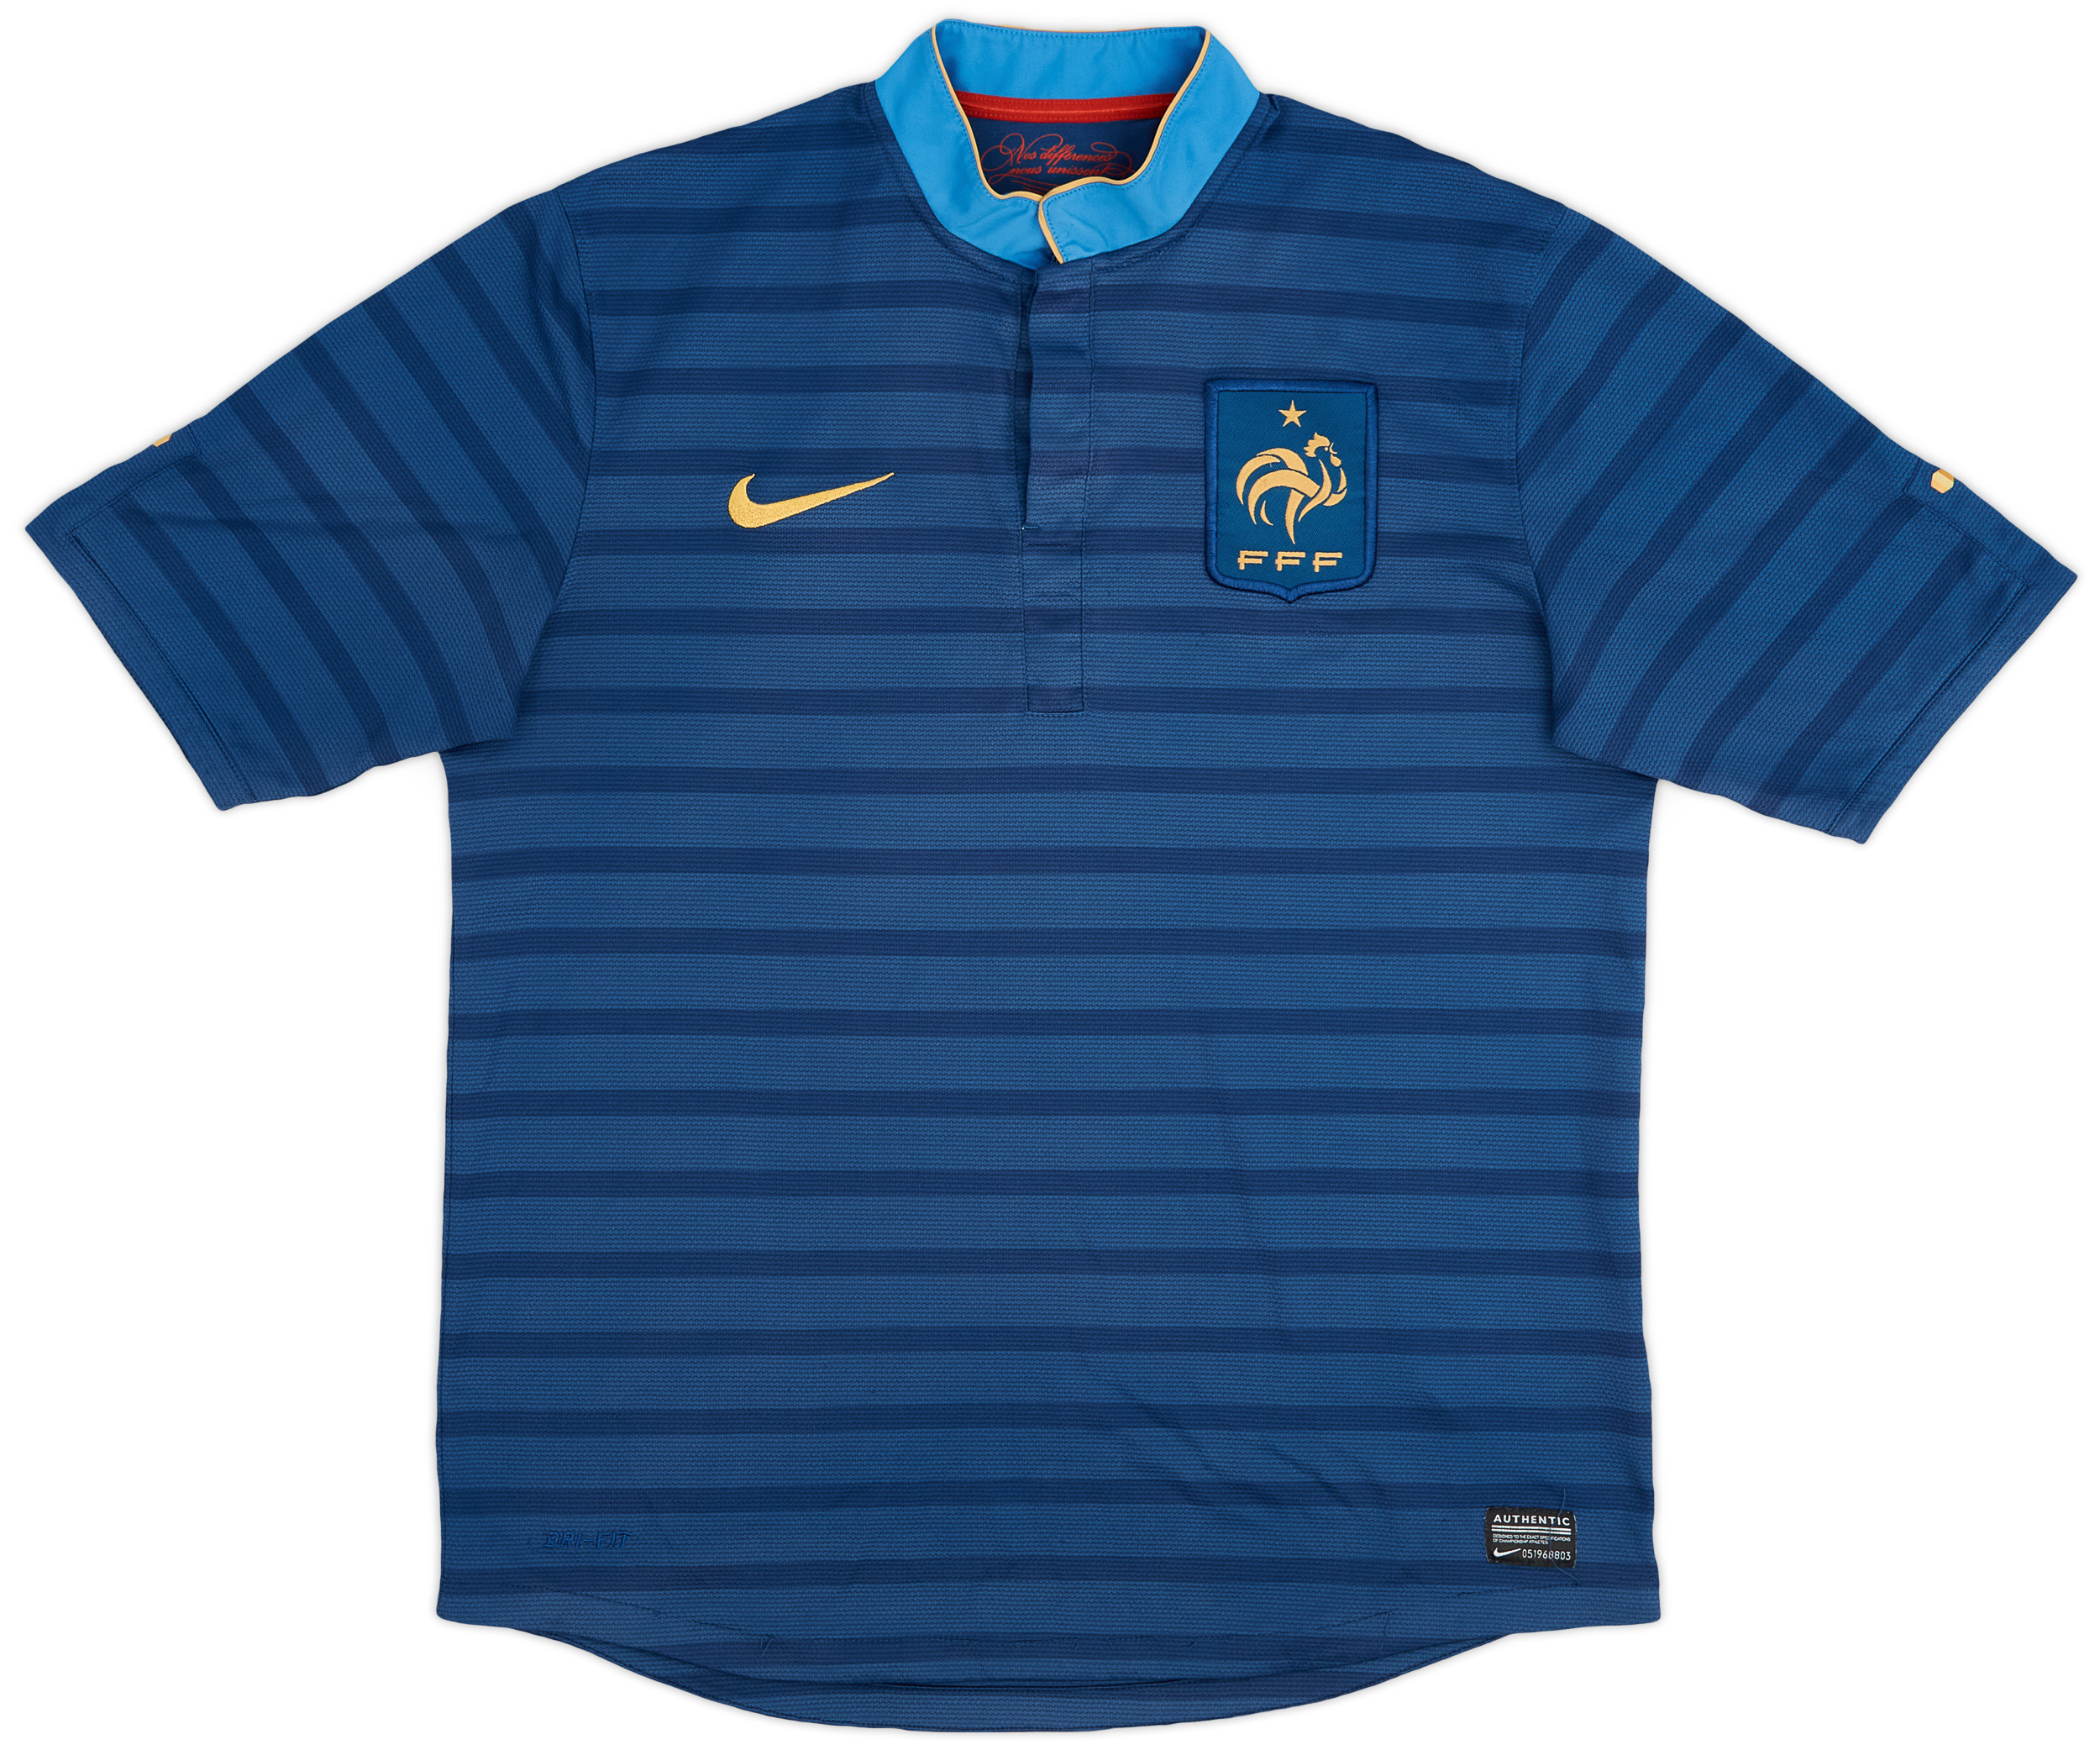 2012-13 France Home Shirt - 9/10 - ()